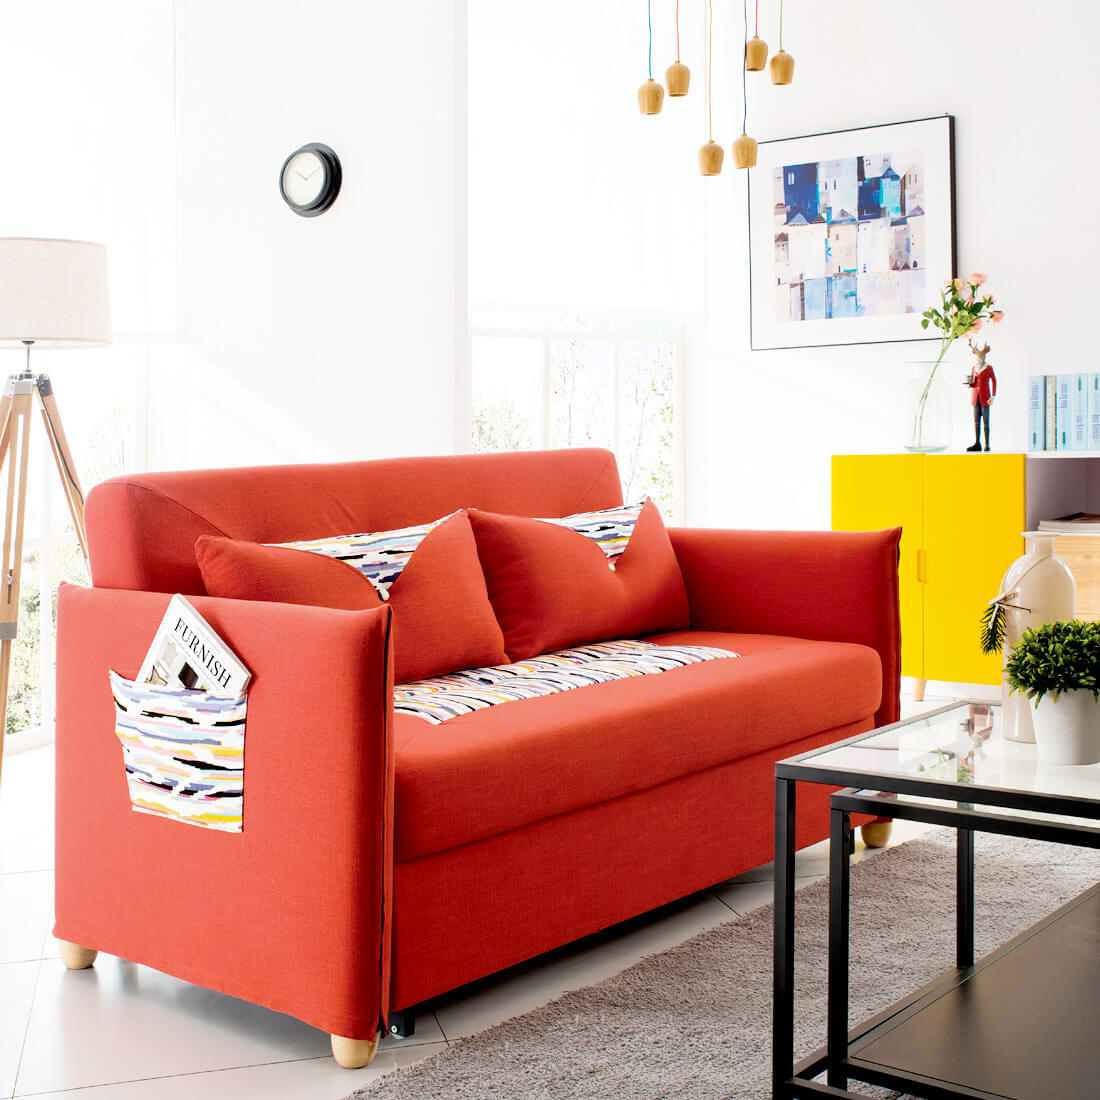 Livingroom Design,Modern style Livingroom,現代風格客廳設計,客廳家具,高品質家具